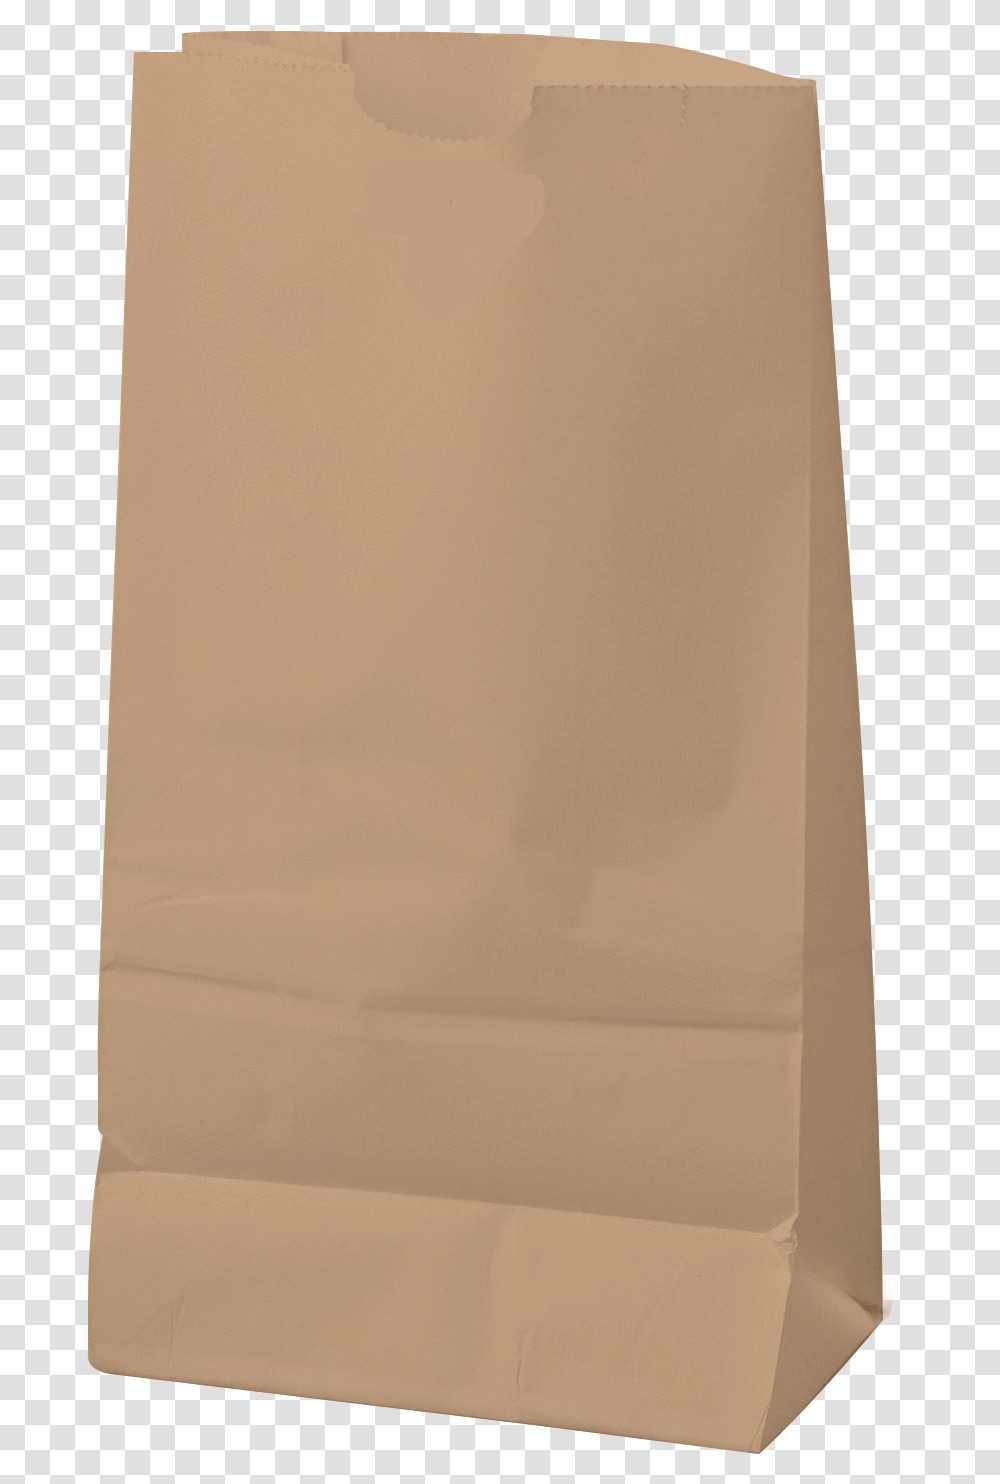 Paper Bags Craft Package Tote Bag, Box, Shopping Bag, Carton Transparent Png